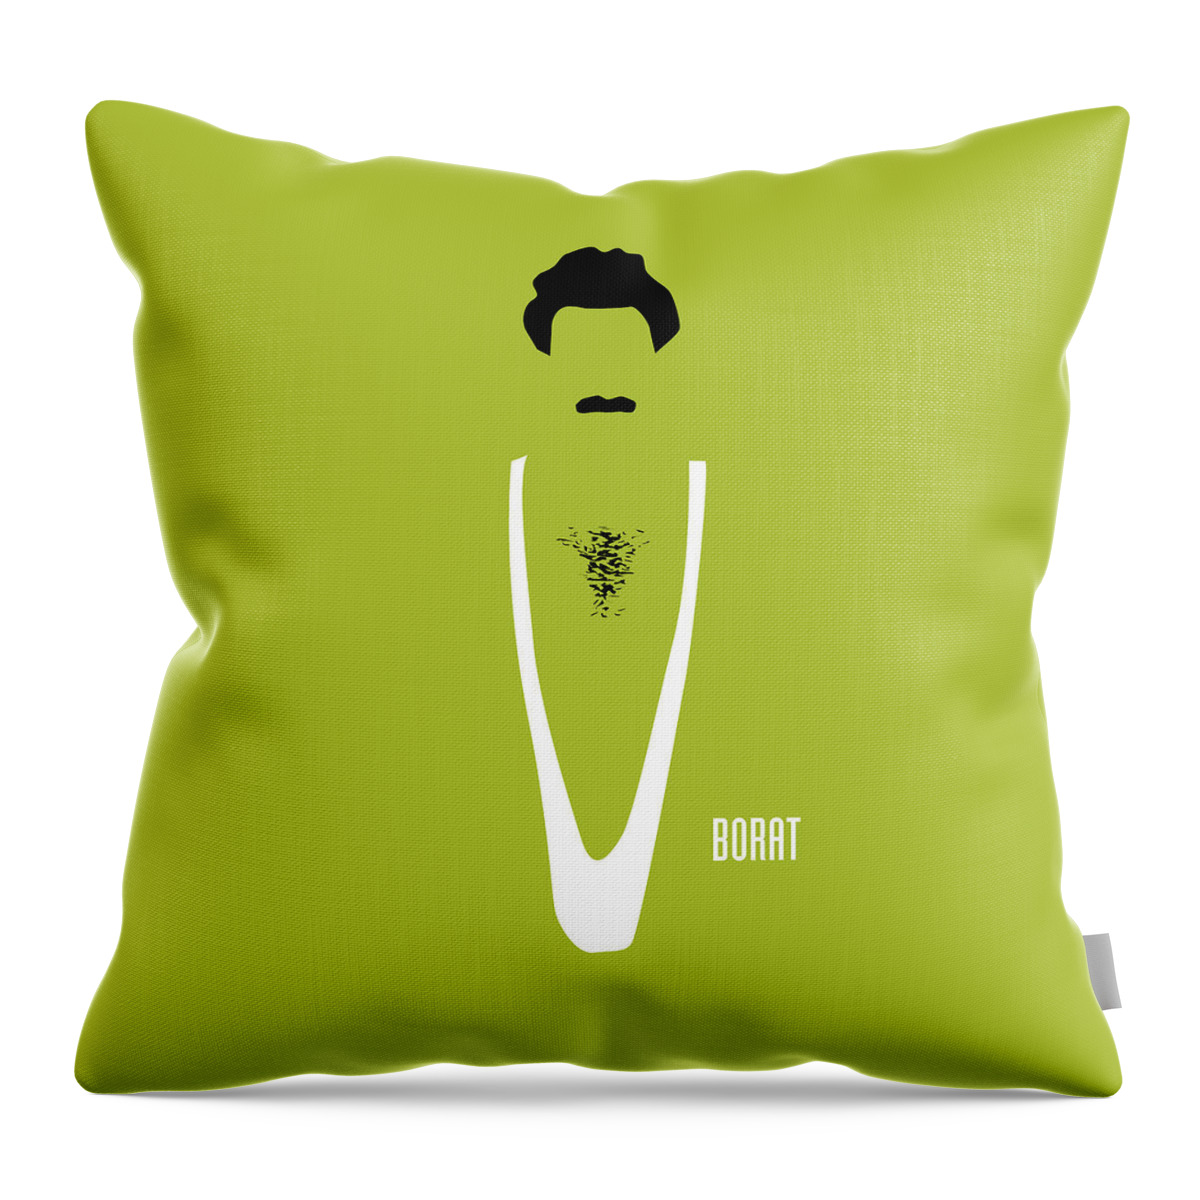 Borat Throw Pillow featuring the digital art Borat - Alternative Movie Poster by Movie Poster Boy